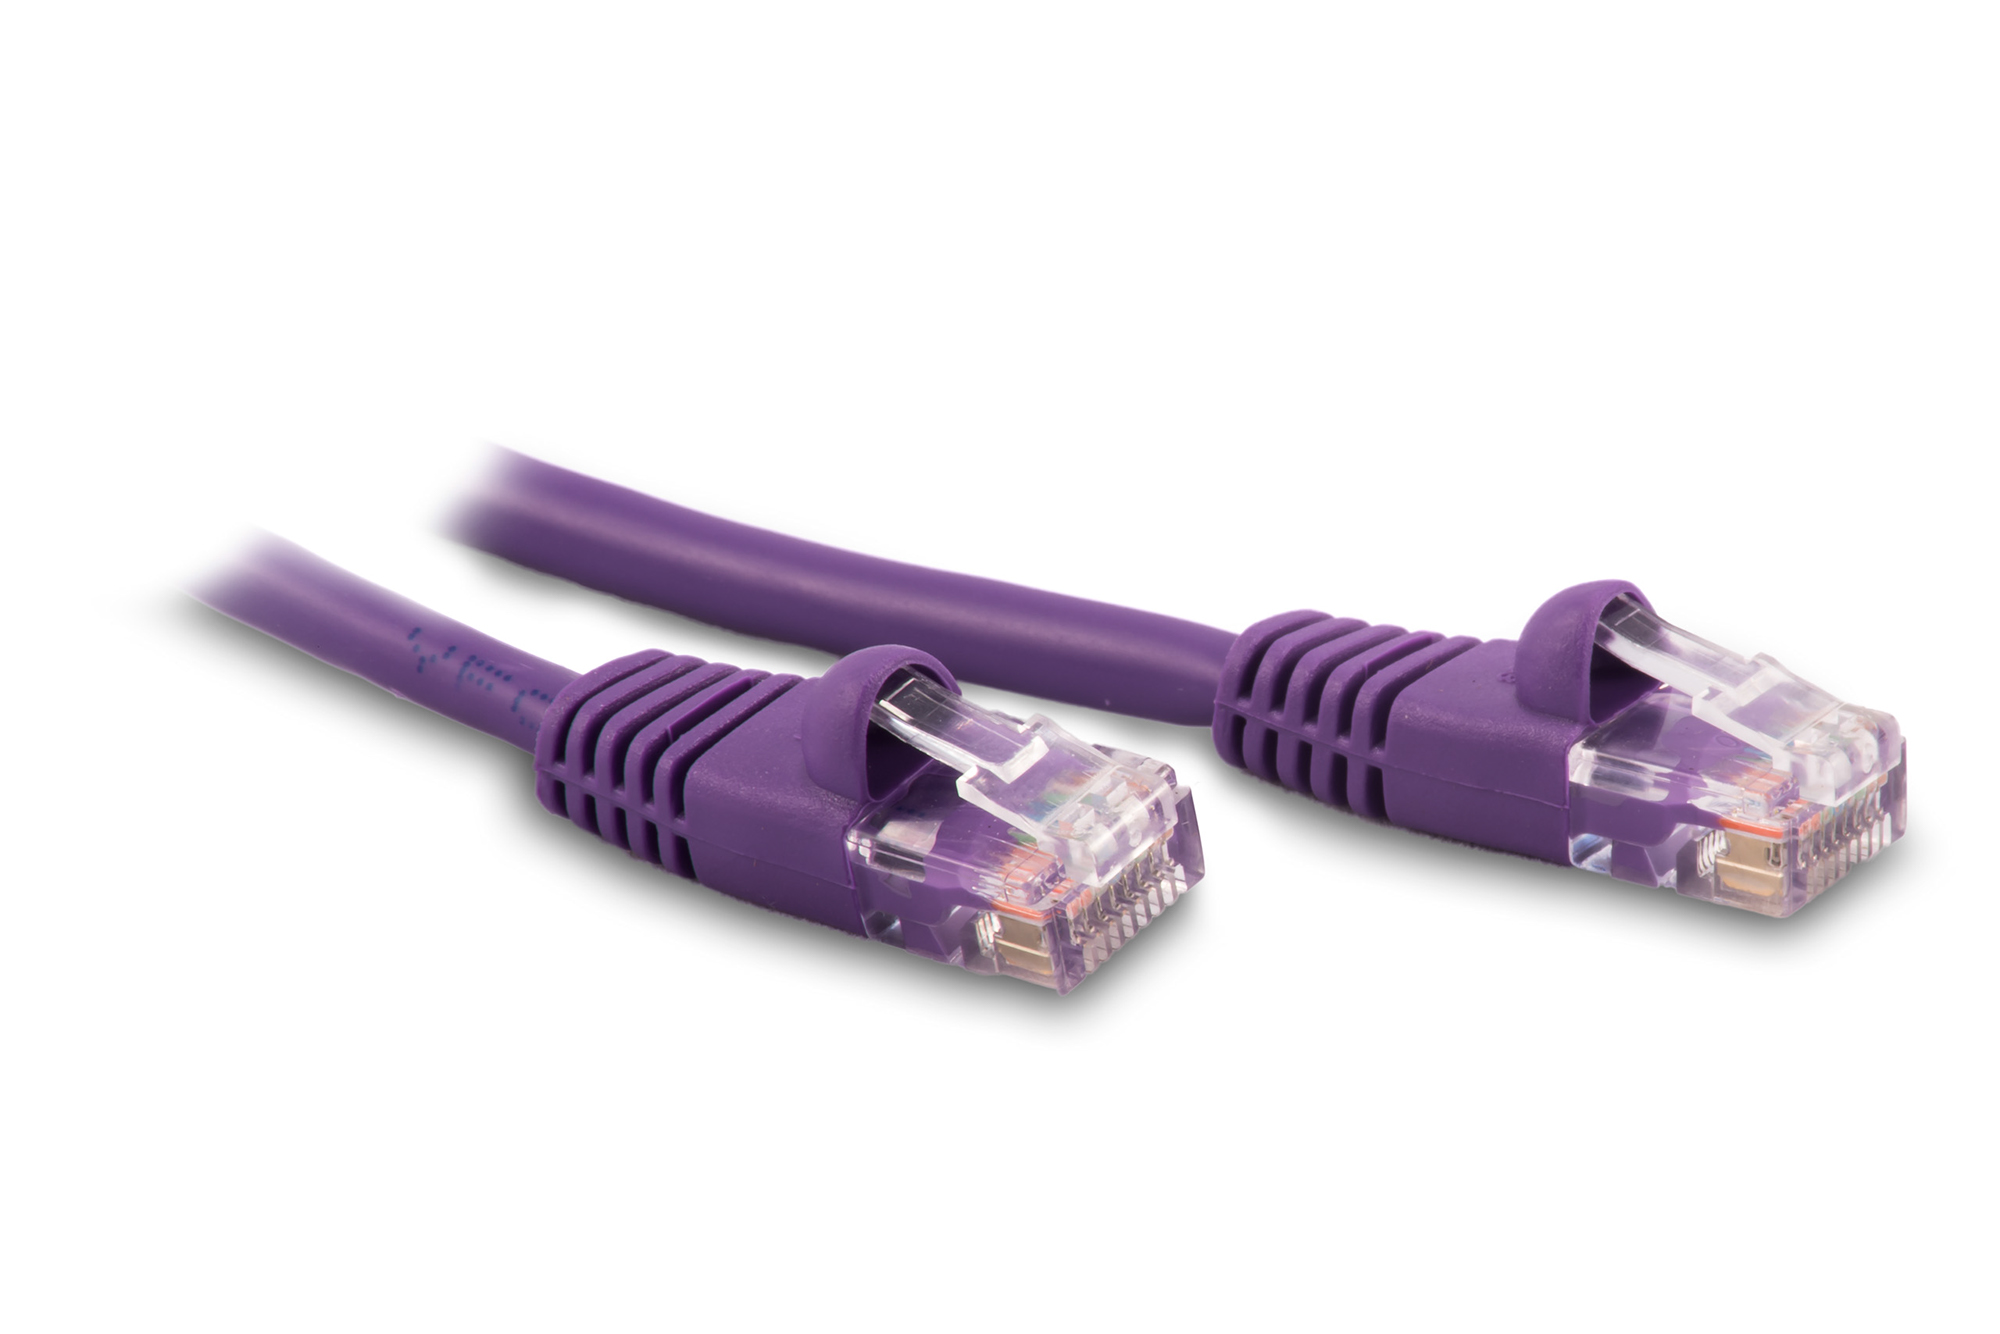 7ft Cat6 Ethernet Patch Cable - Violet Color - Snagless Boot, Stranded, RJ45, 550Mhz, 24AWG